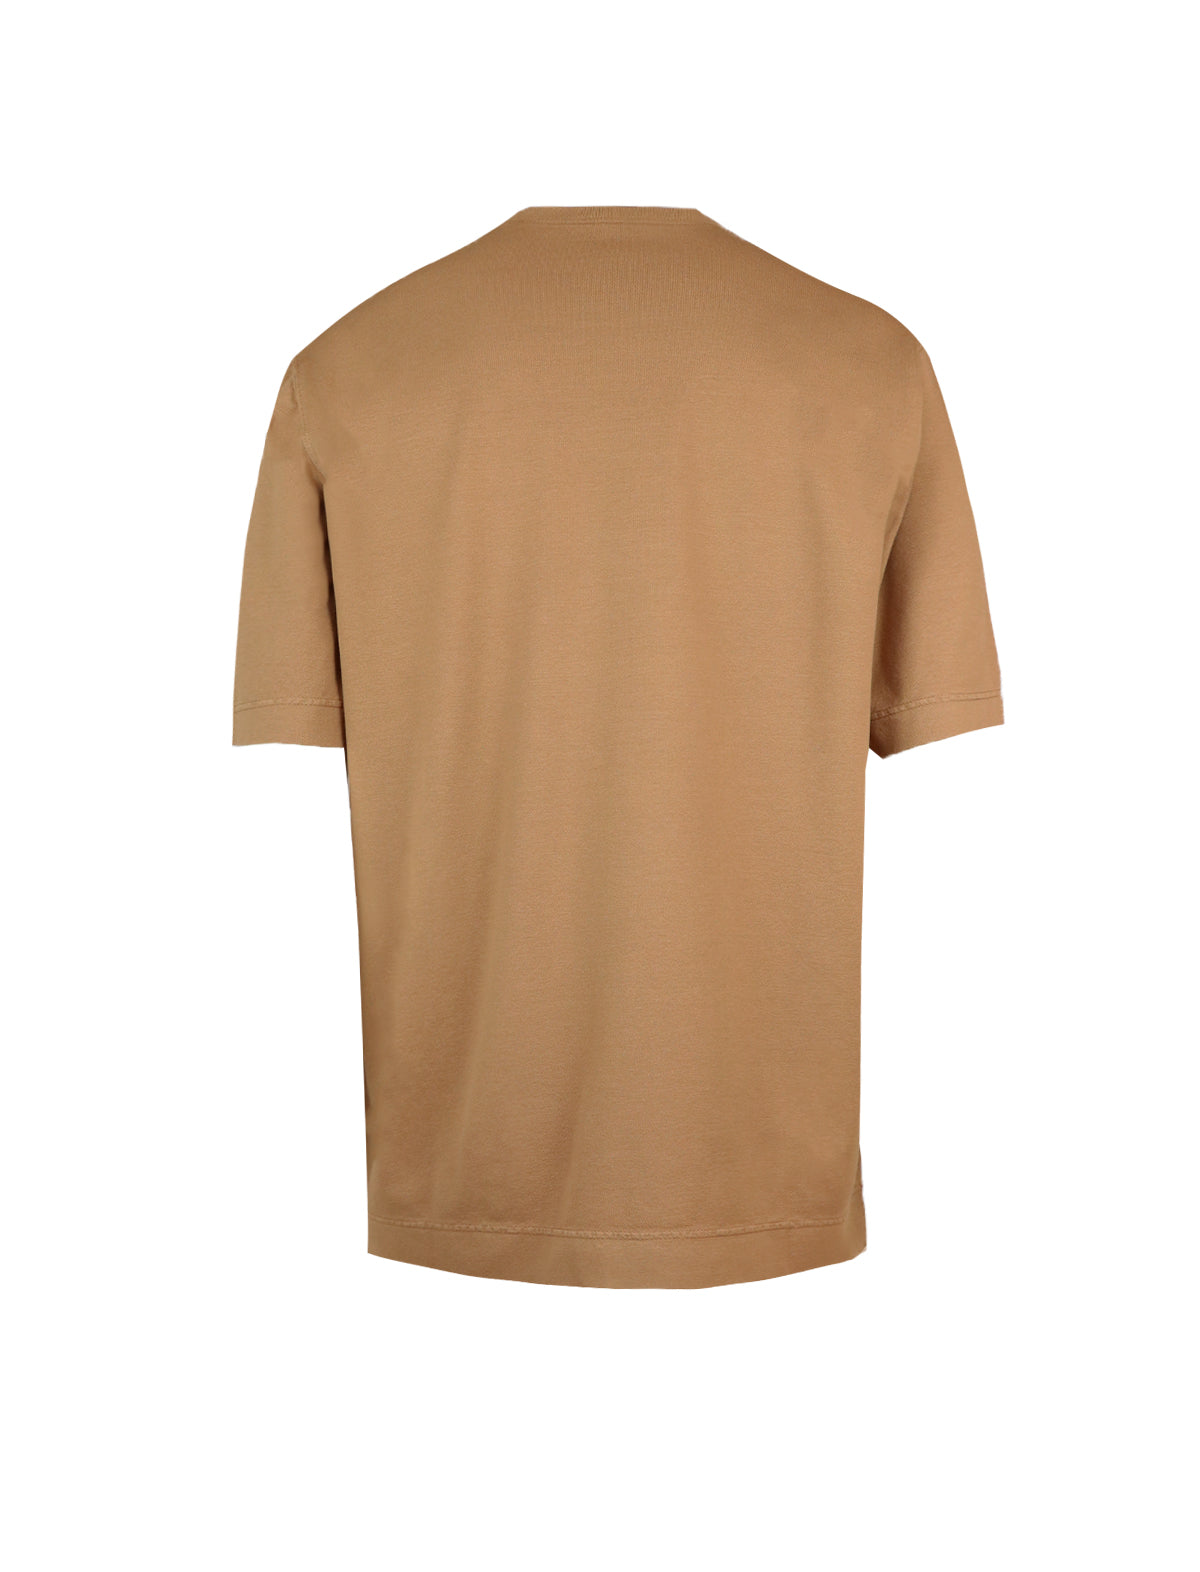 CIRCOLO 1901 Cotton-Blend T-Shirt in Camel